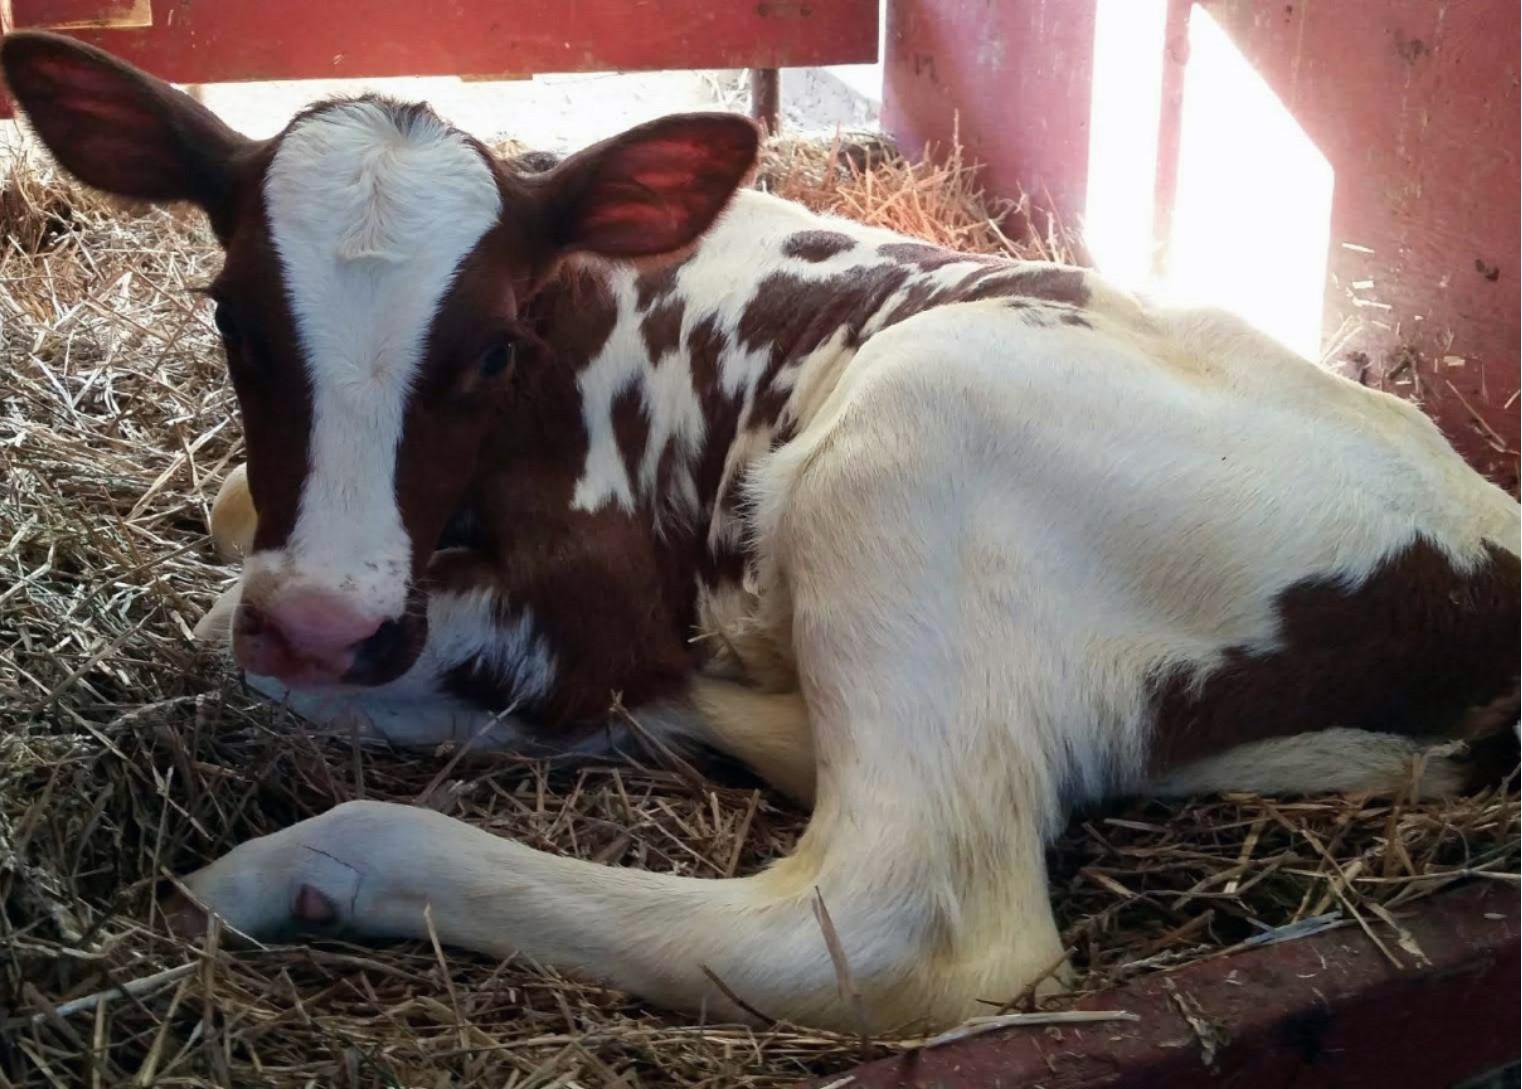 Calf laying on straw